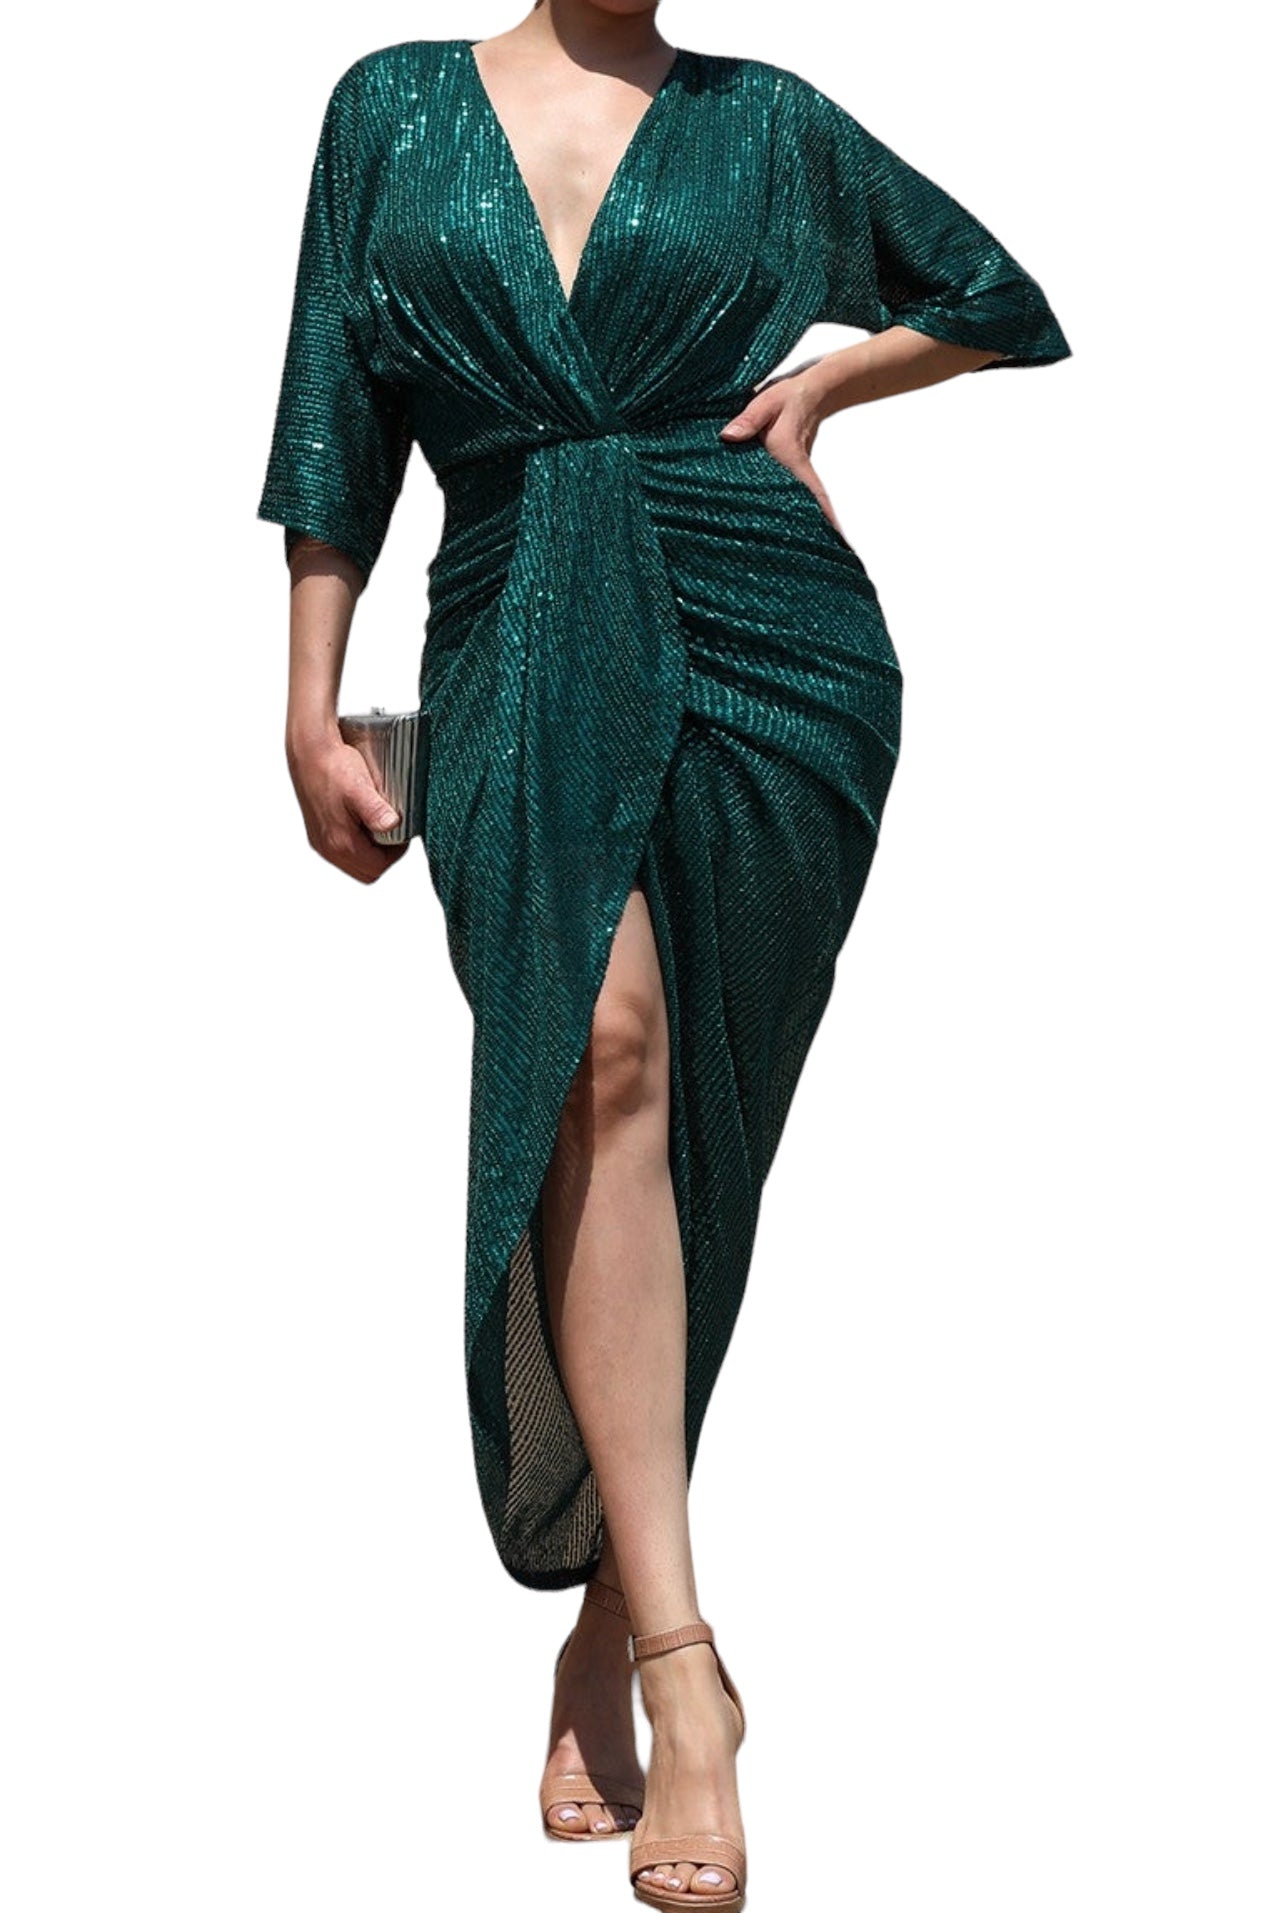 Shine In The Spotlight Emerald Dress